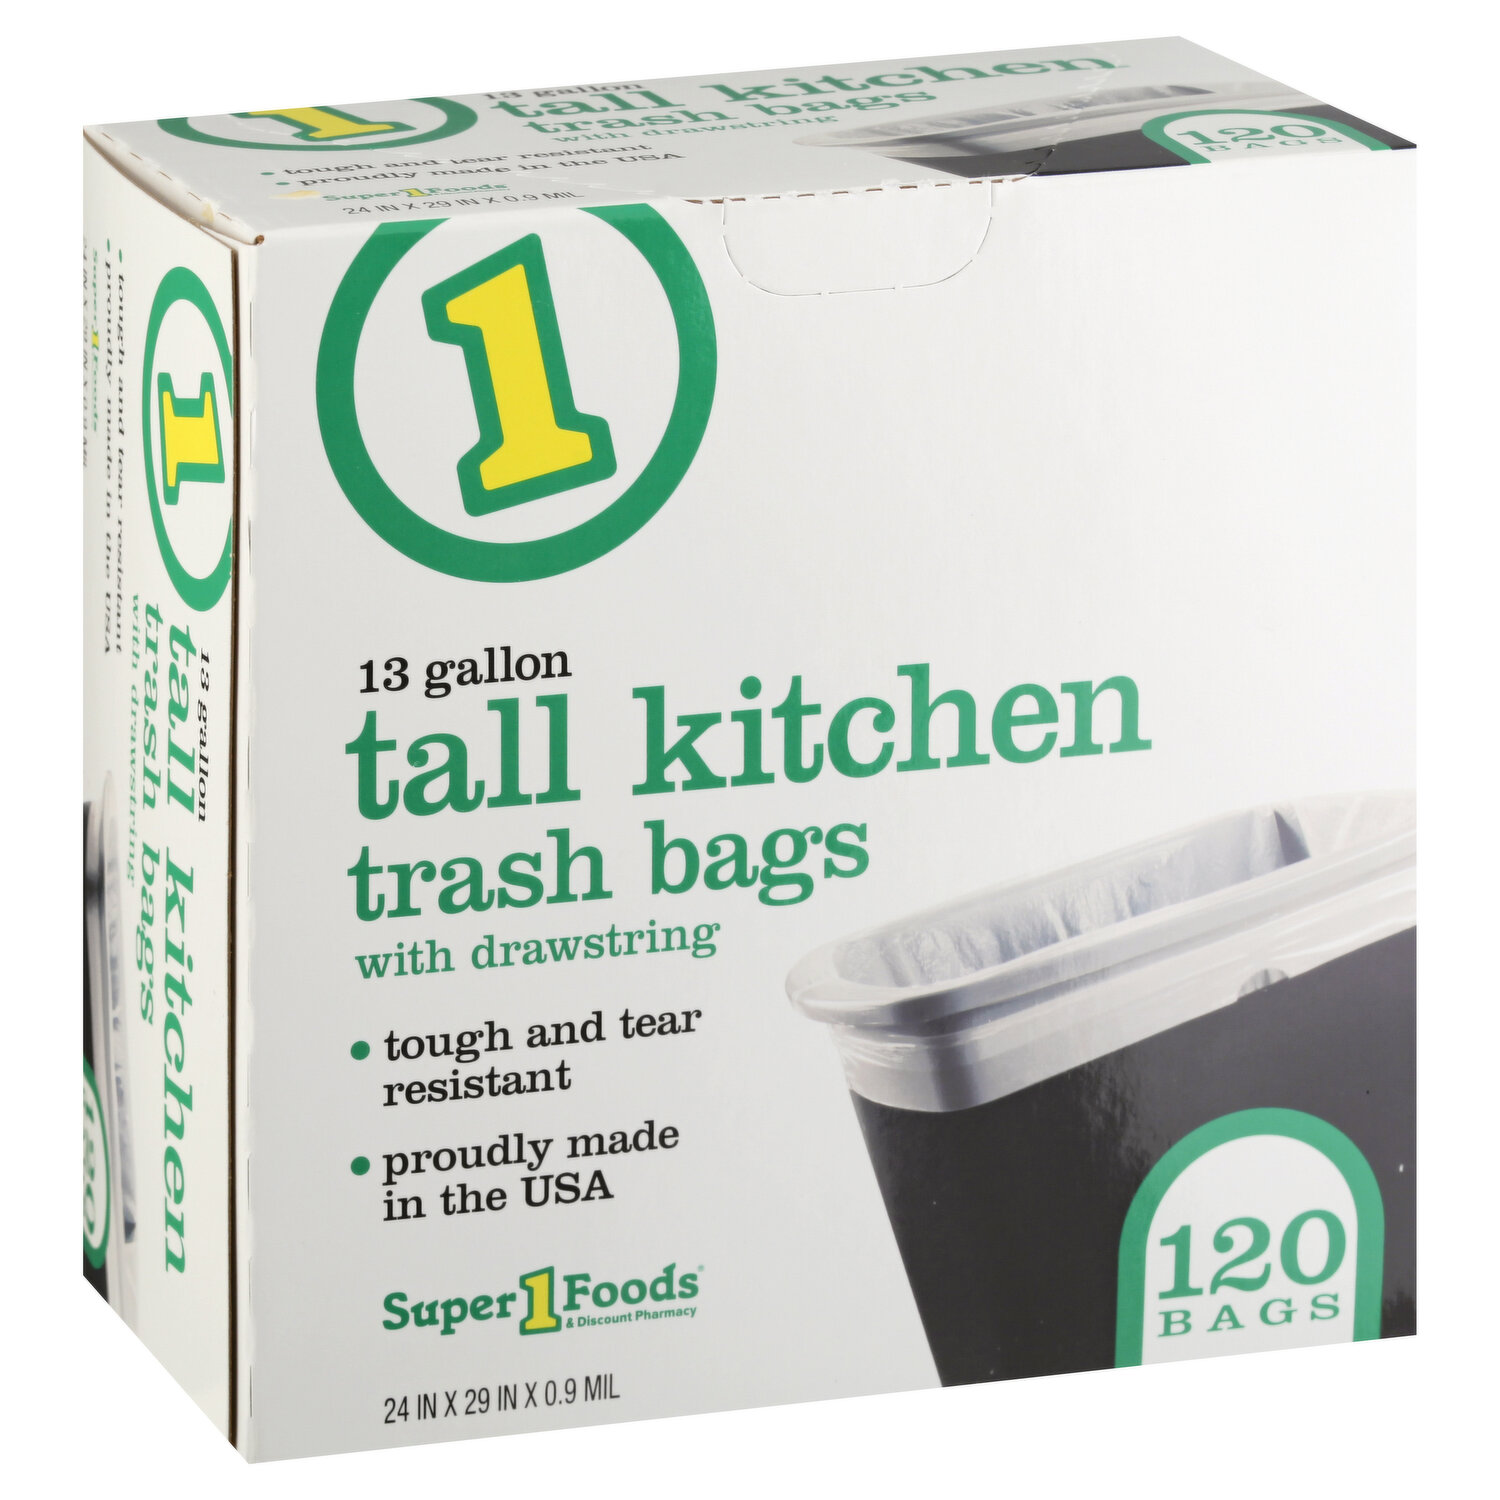 Tall Kitchen Trash Bags, 13 Gallon, 120 Bags